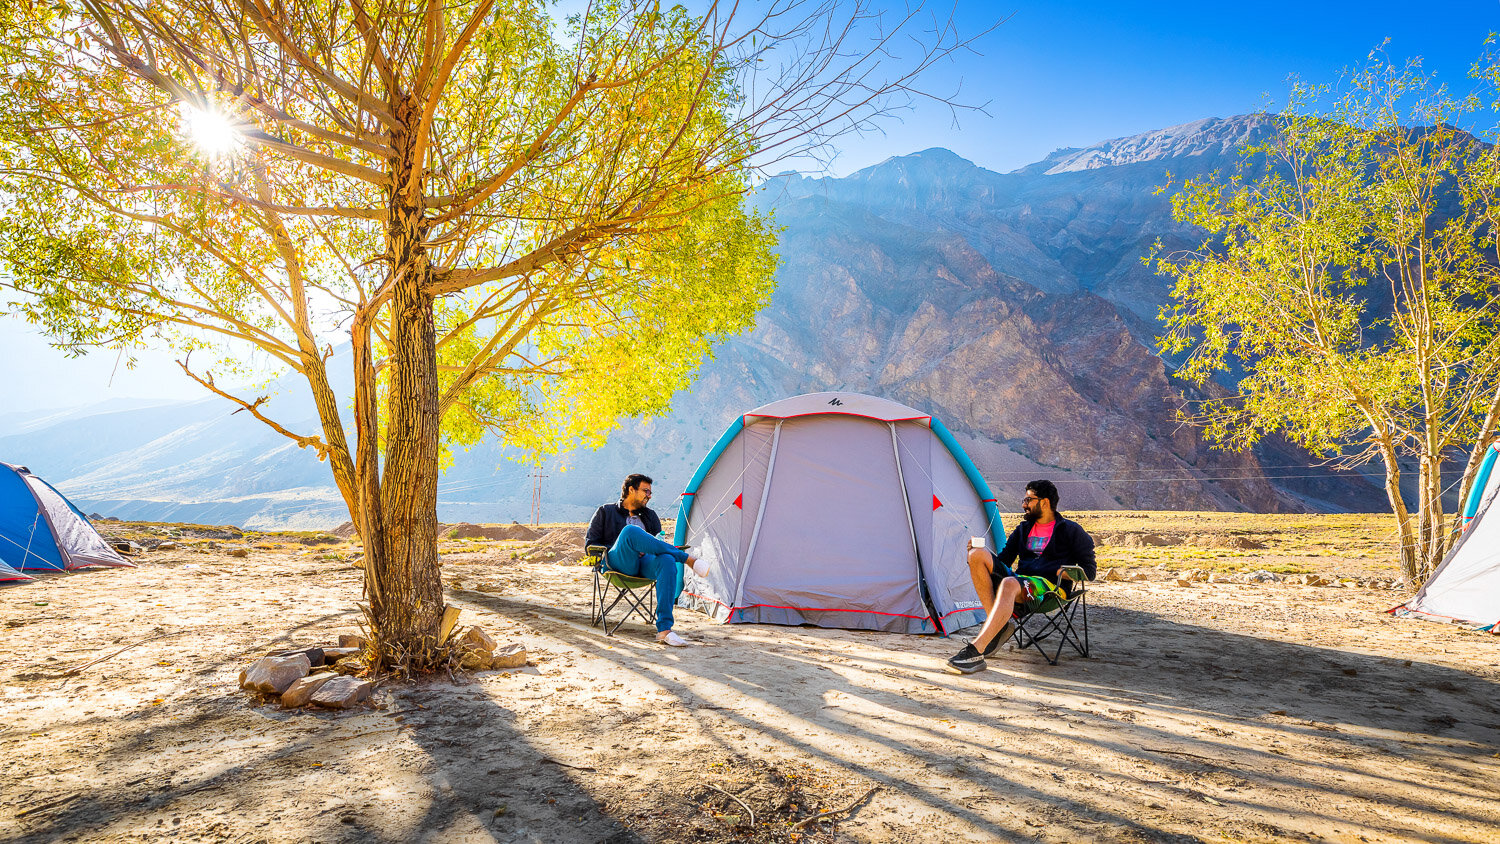 campsite in himachal pradesh spiti valley by prathamesh dixit.jpg